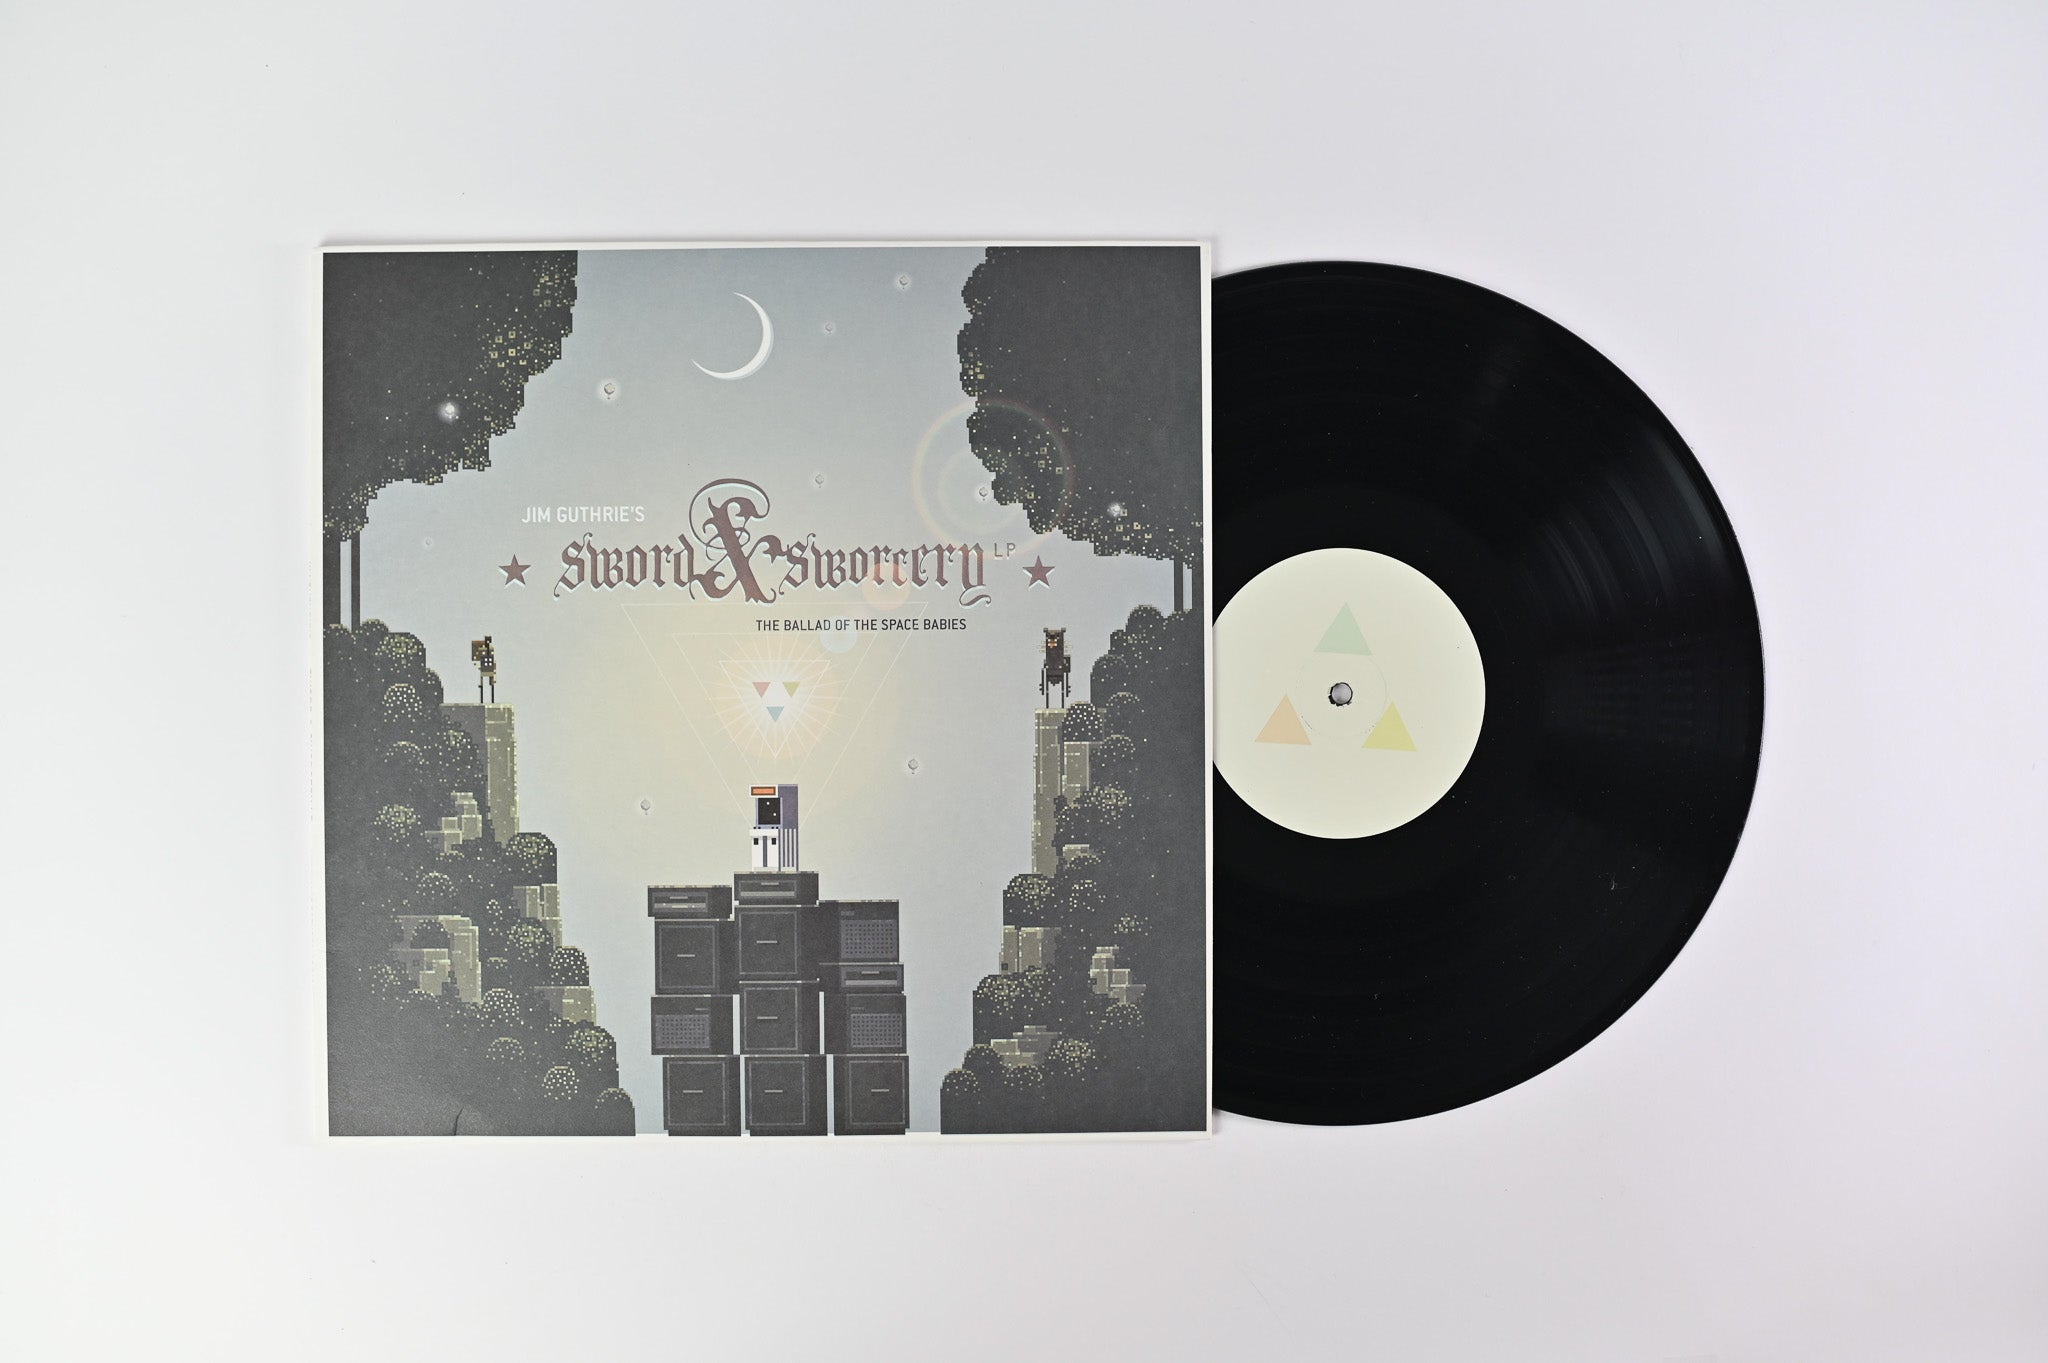 Jim Guthrie - Sword & Sworcery LP - The Ballad Of The Space Babies on Dark Fruit Ltd 180g Reissue